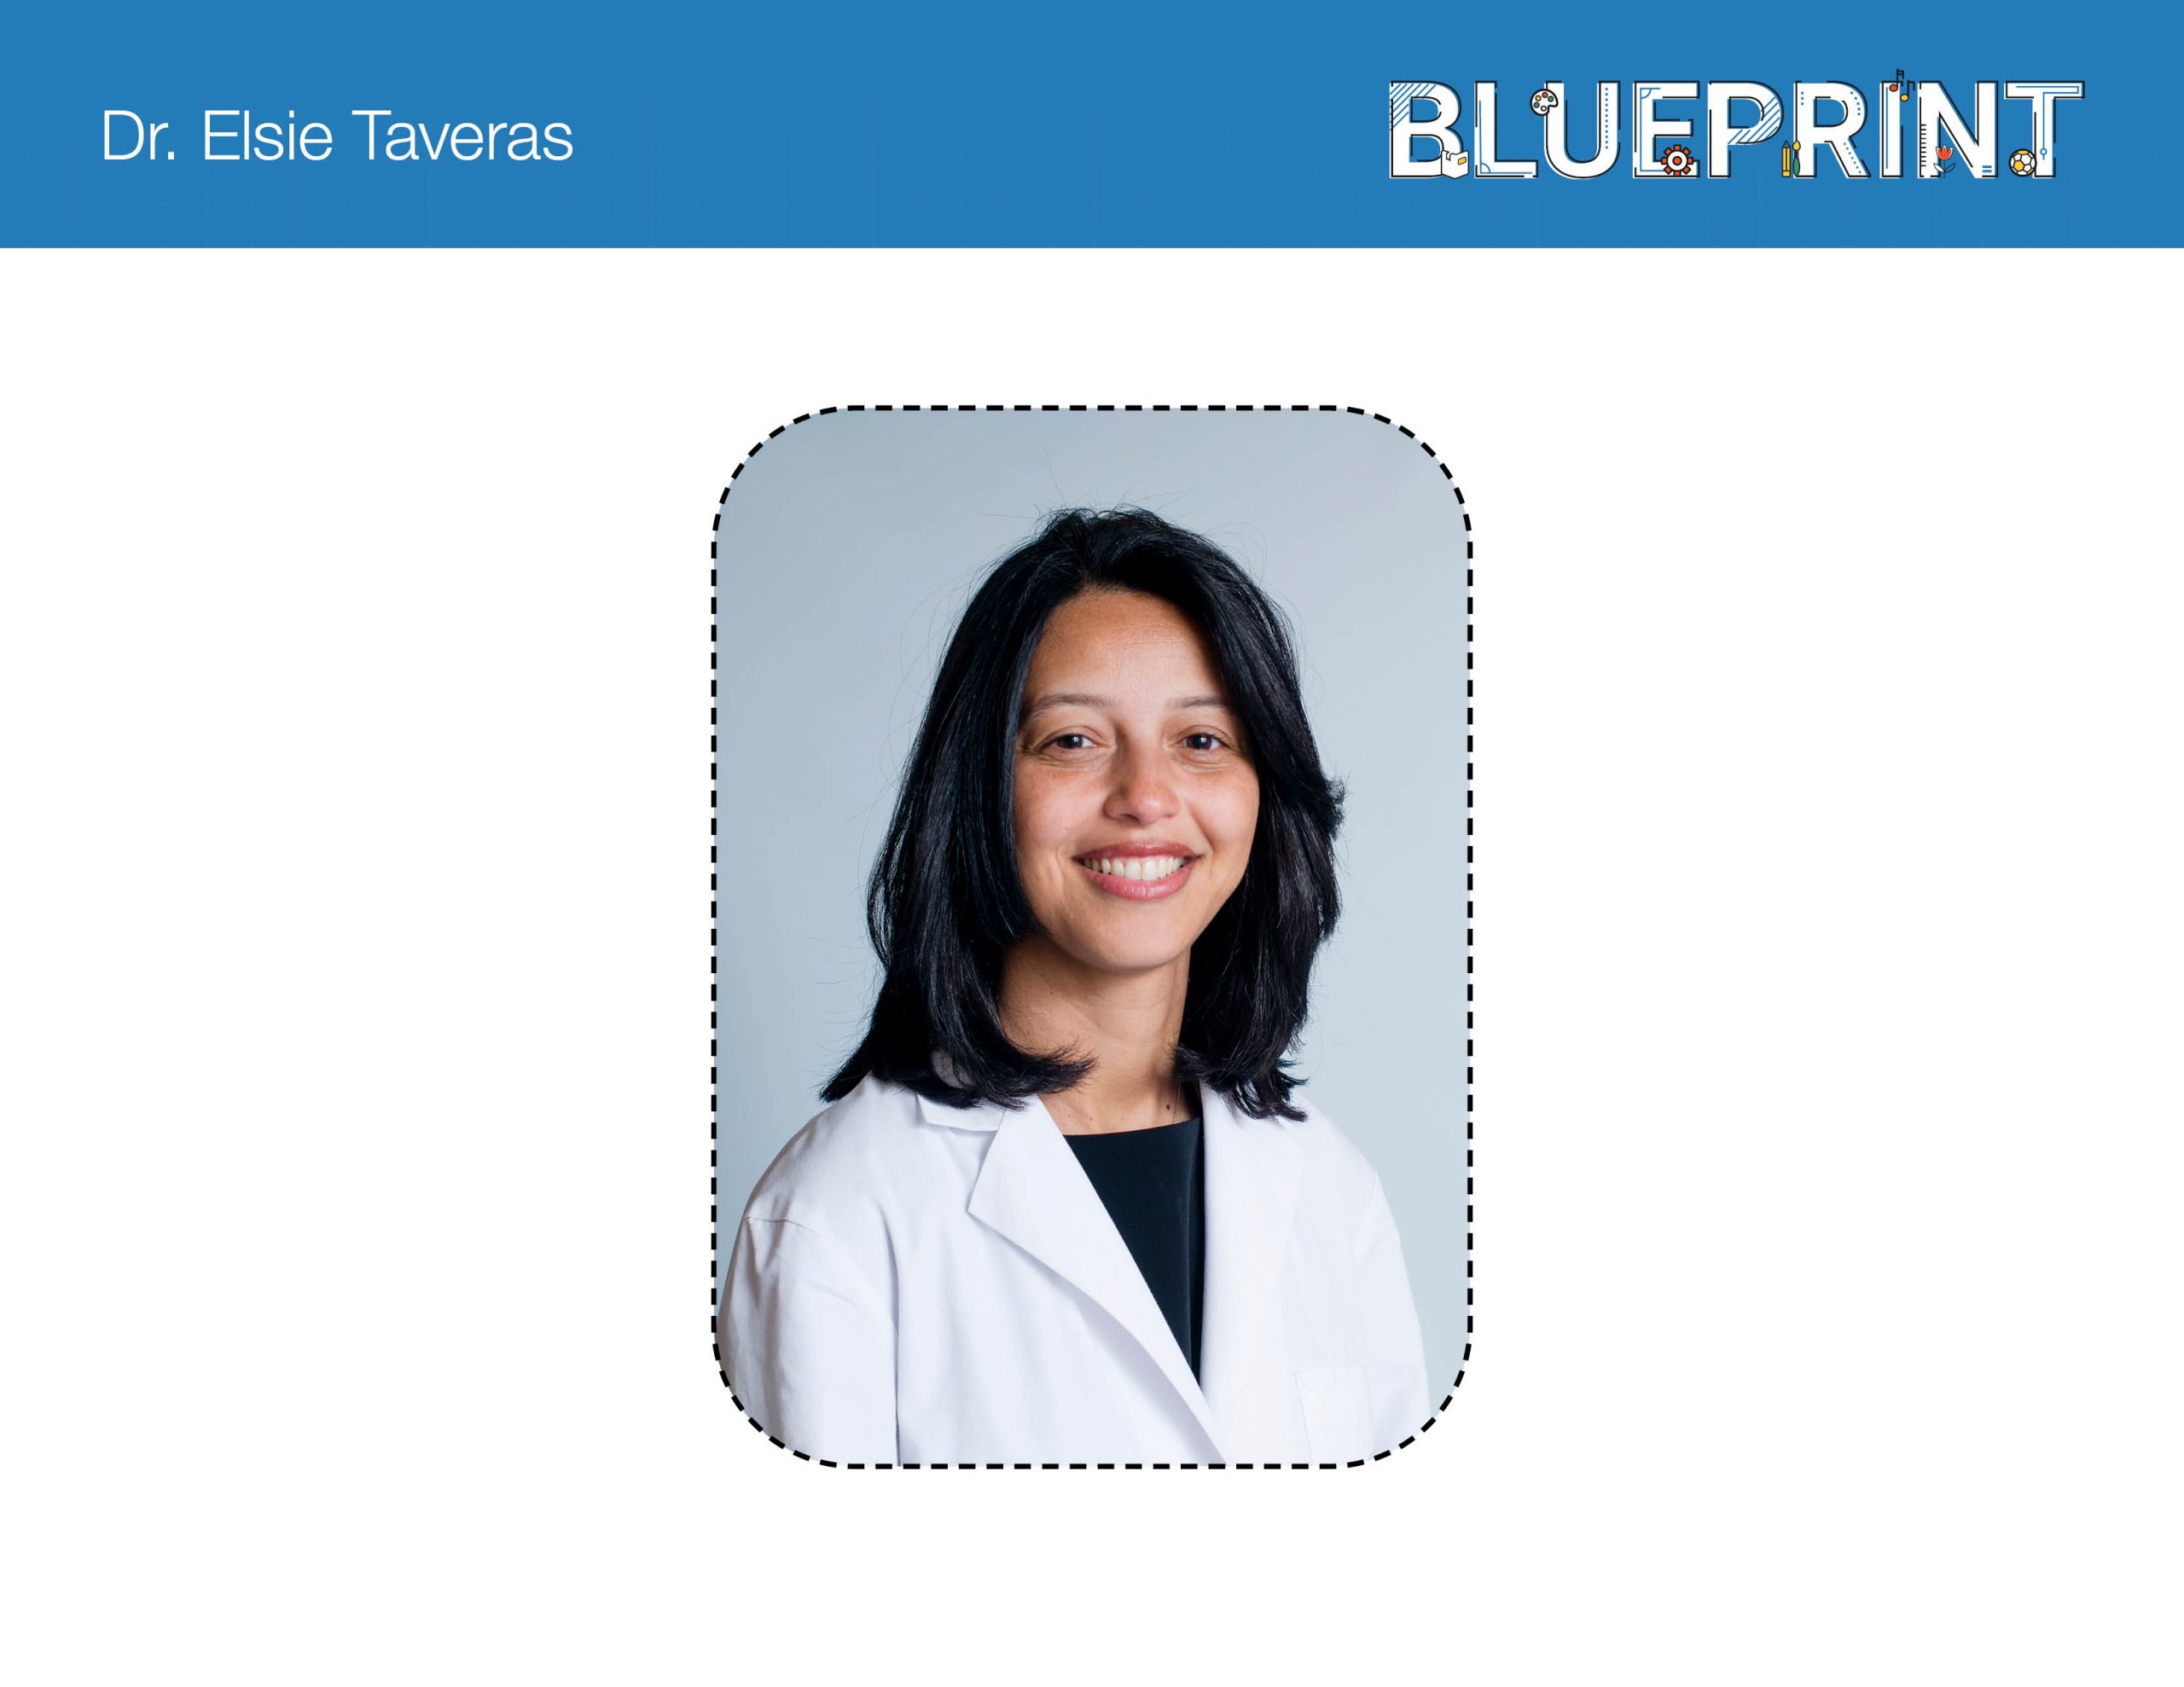 Day 2 - Dr. Elsie Taveras